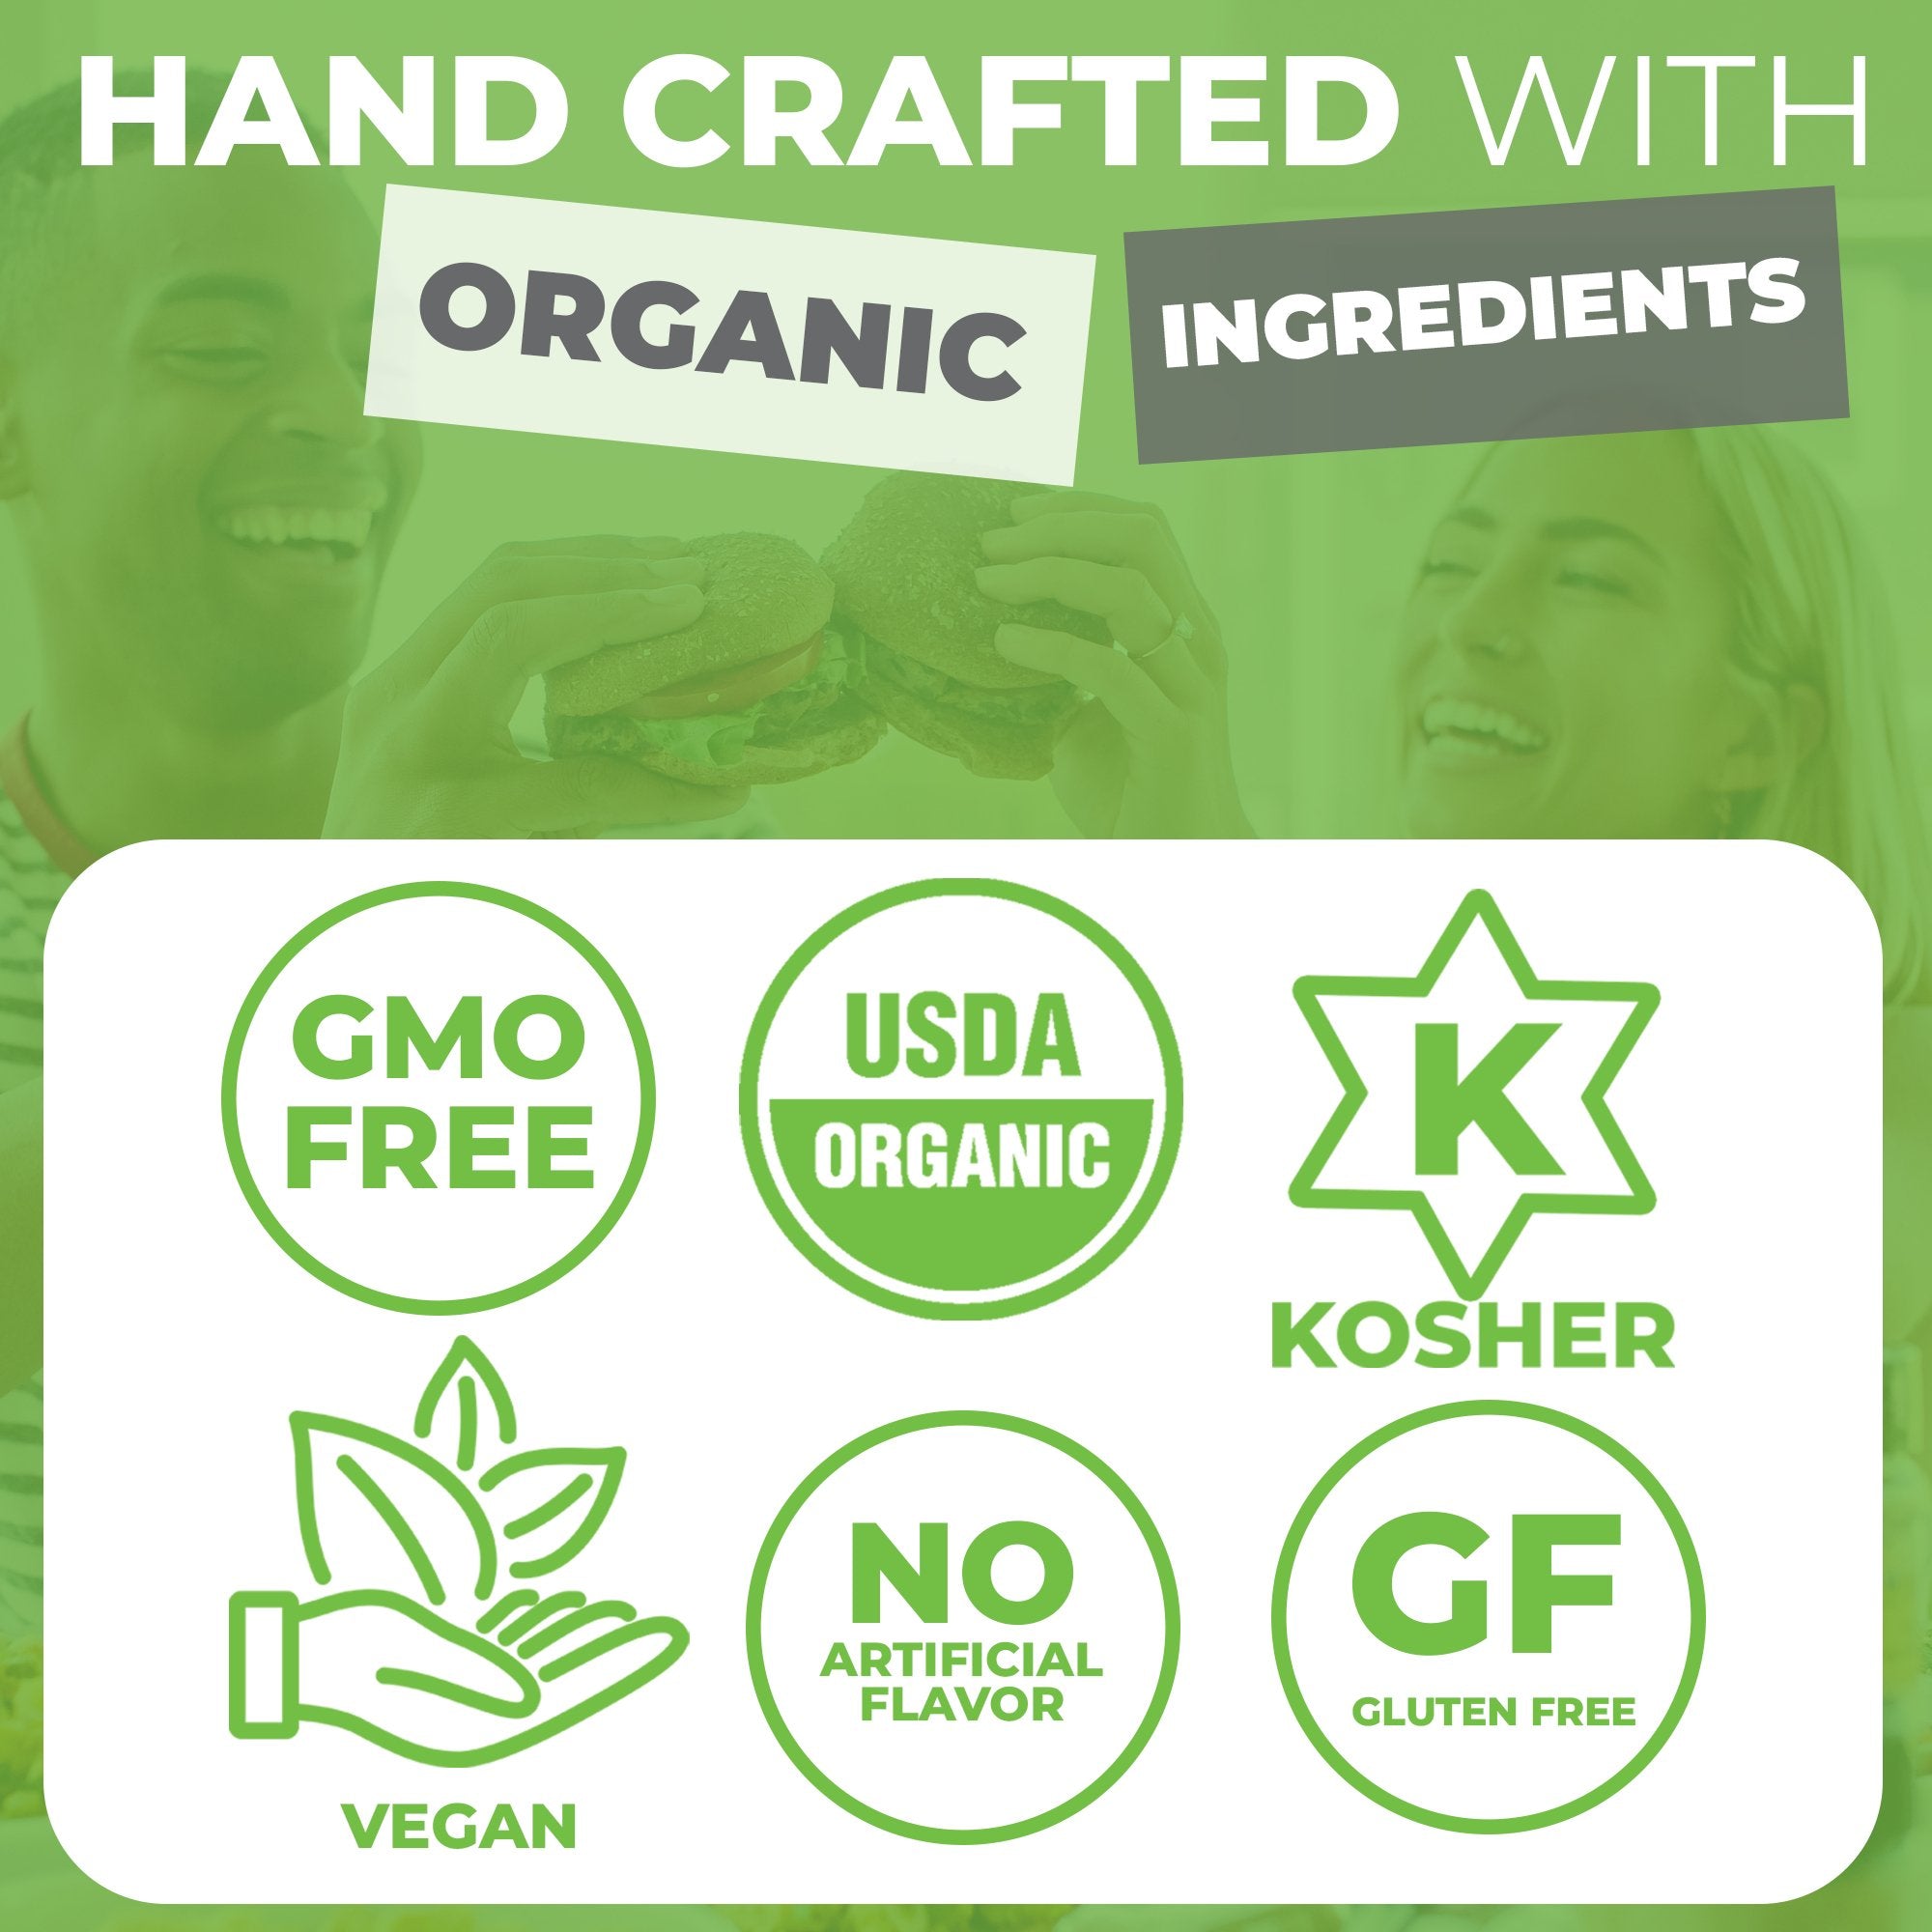 FreshJax Whole Bay Leaves are GMO-Free, USDA Organic, Kosher, Vegan and Gluten-Free